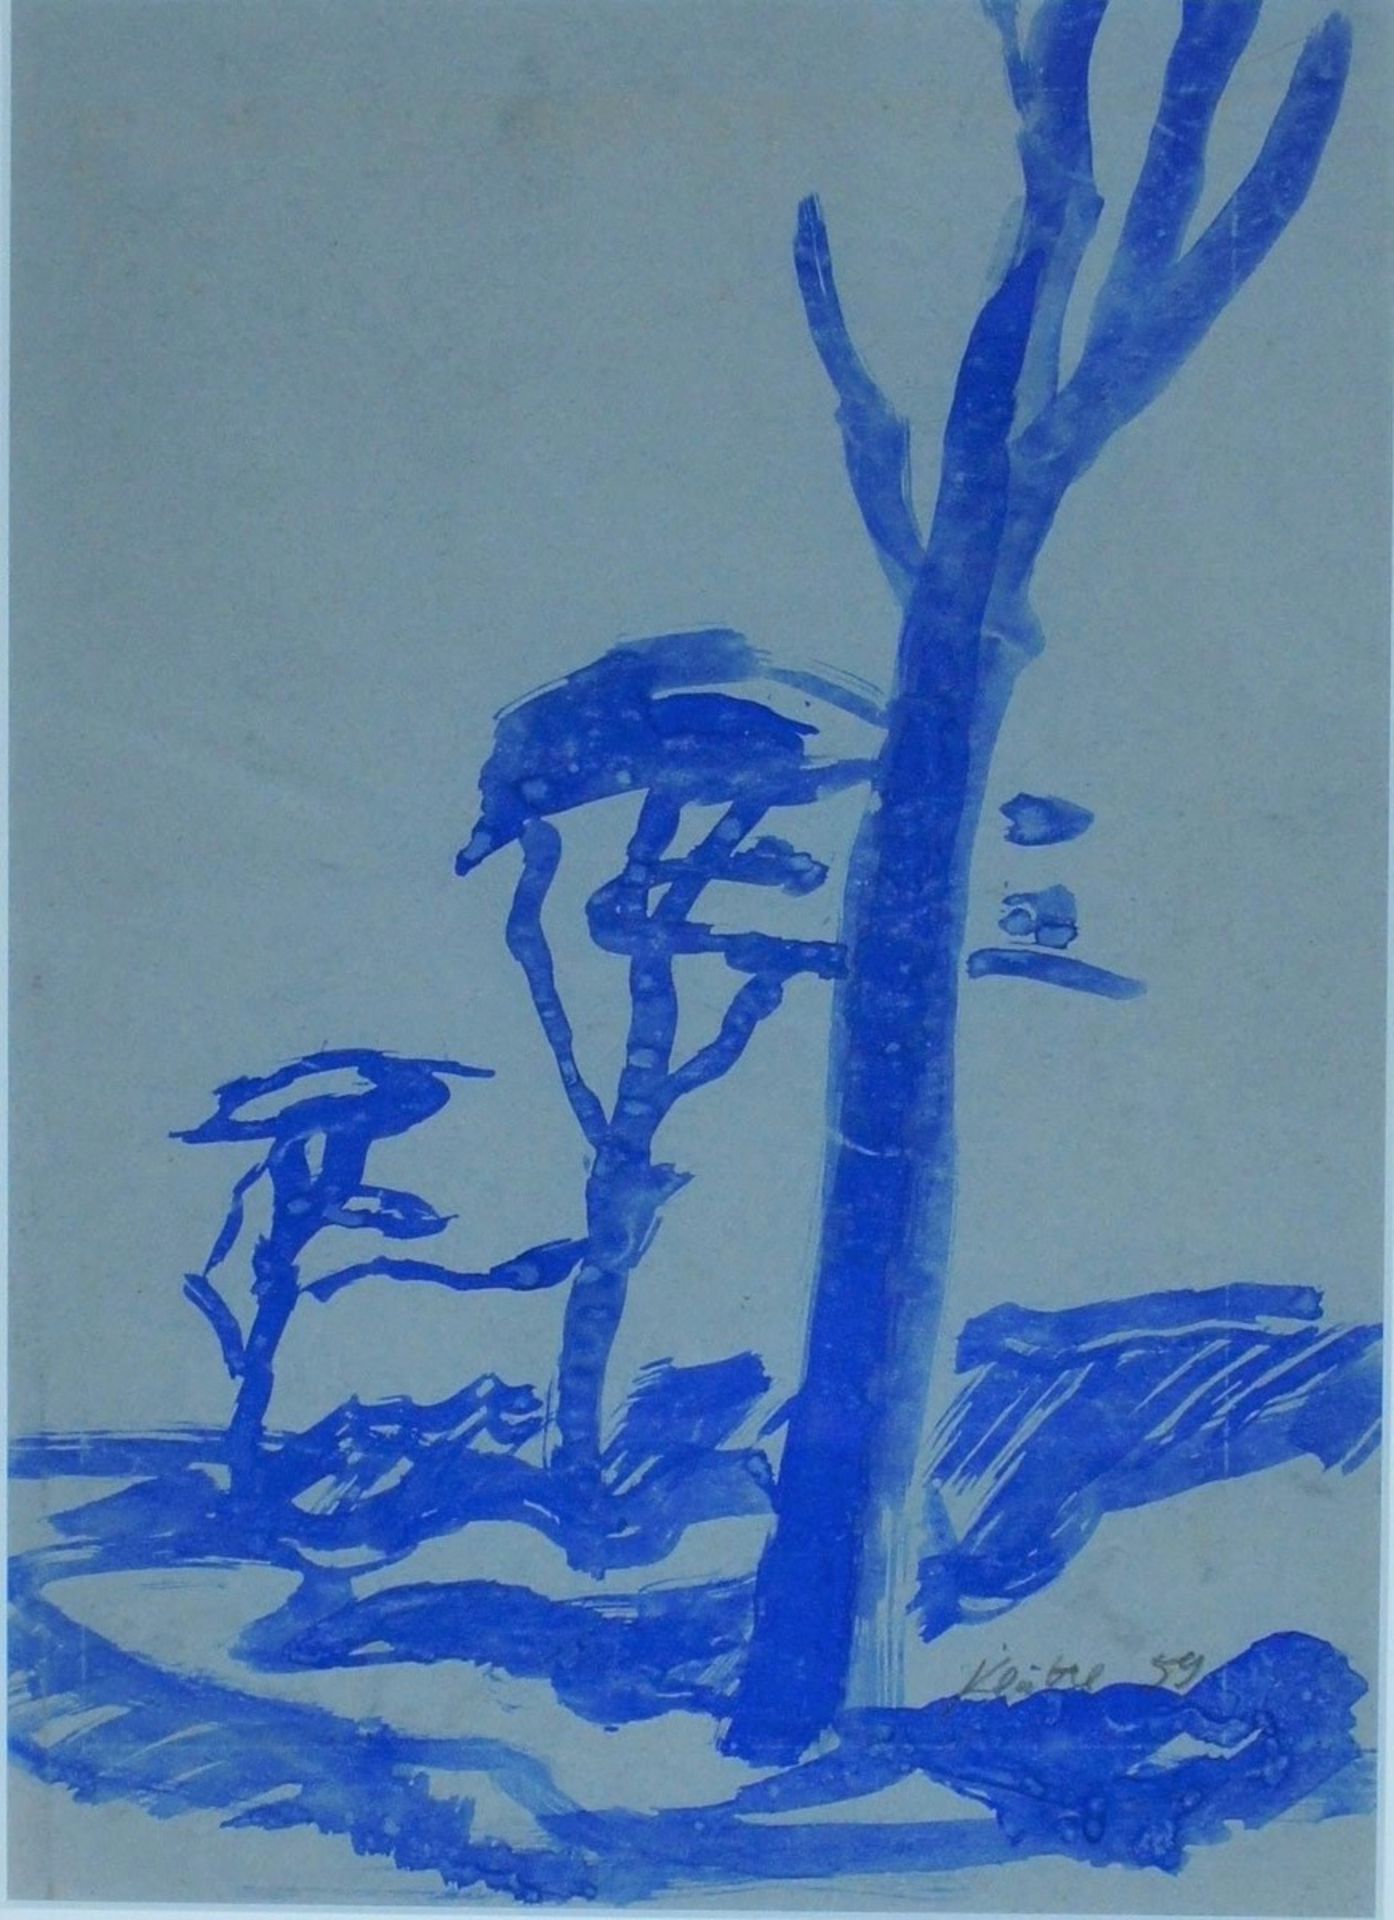 Klatte, Ruth, Windflüchter in blau, Aquarell, 40 x 29, sign.